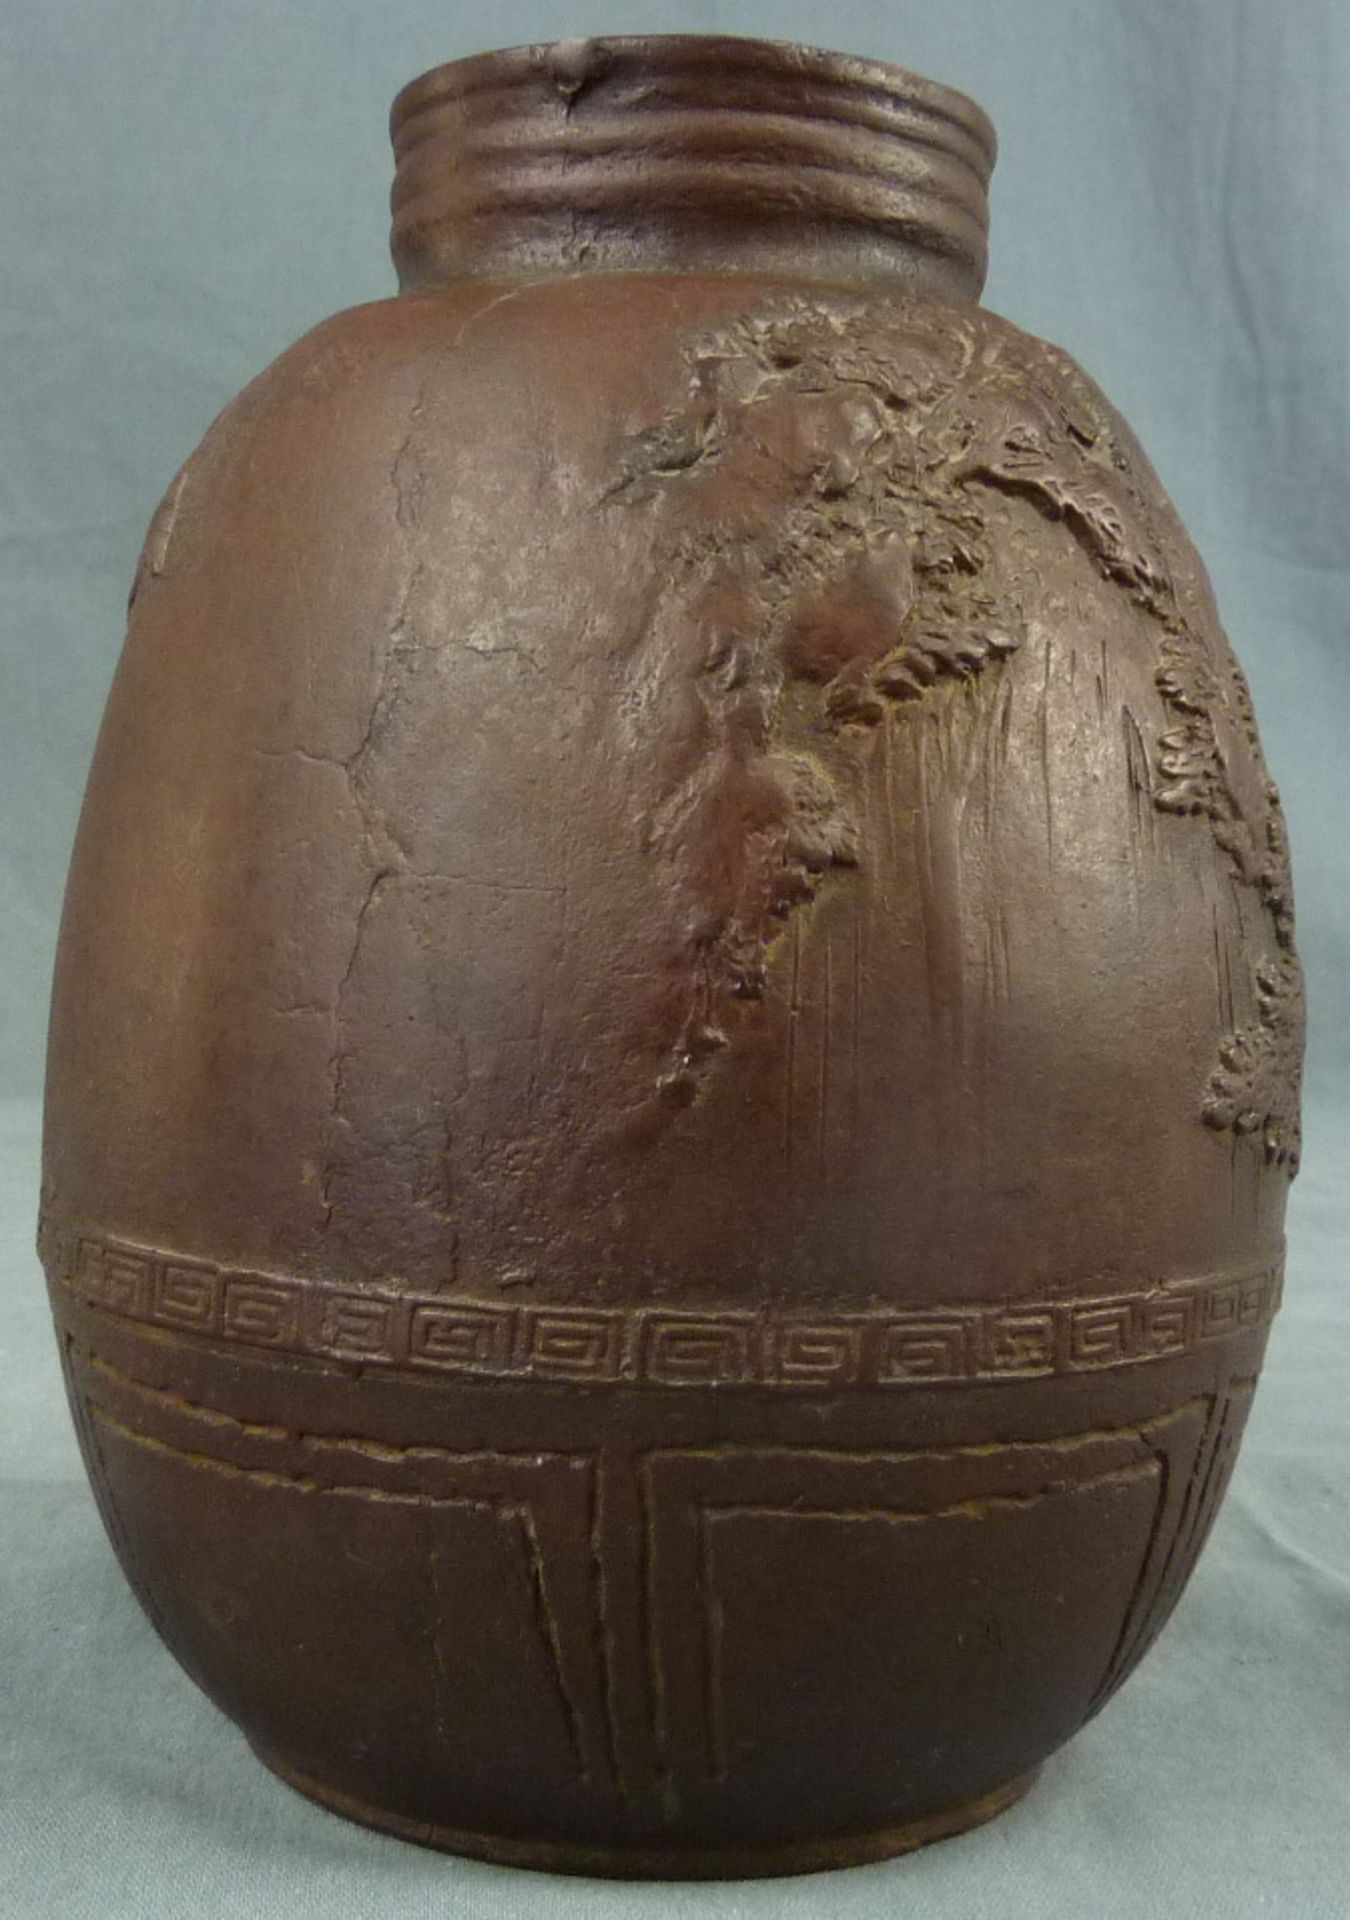 Vase. China / Japan? Bronzed. Inscriptions. Cast iron?17 cm high.Vase. Wohl China / Japan. - Bild 2 aus 8